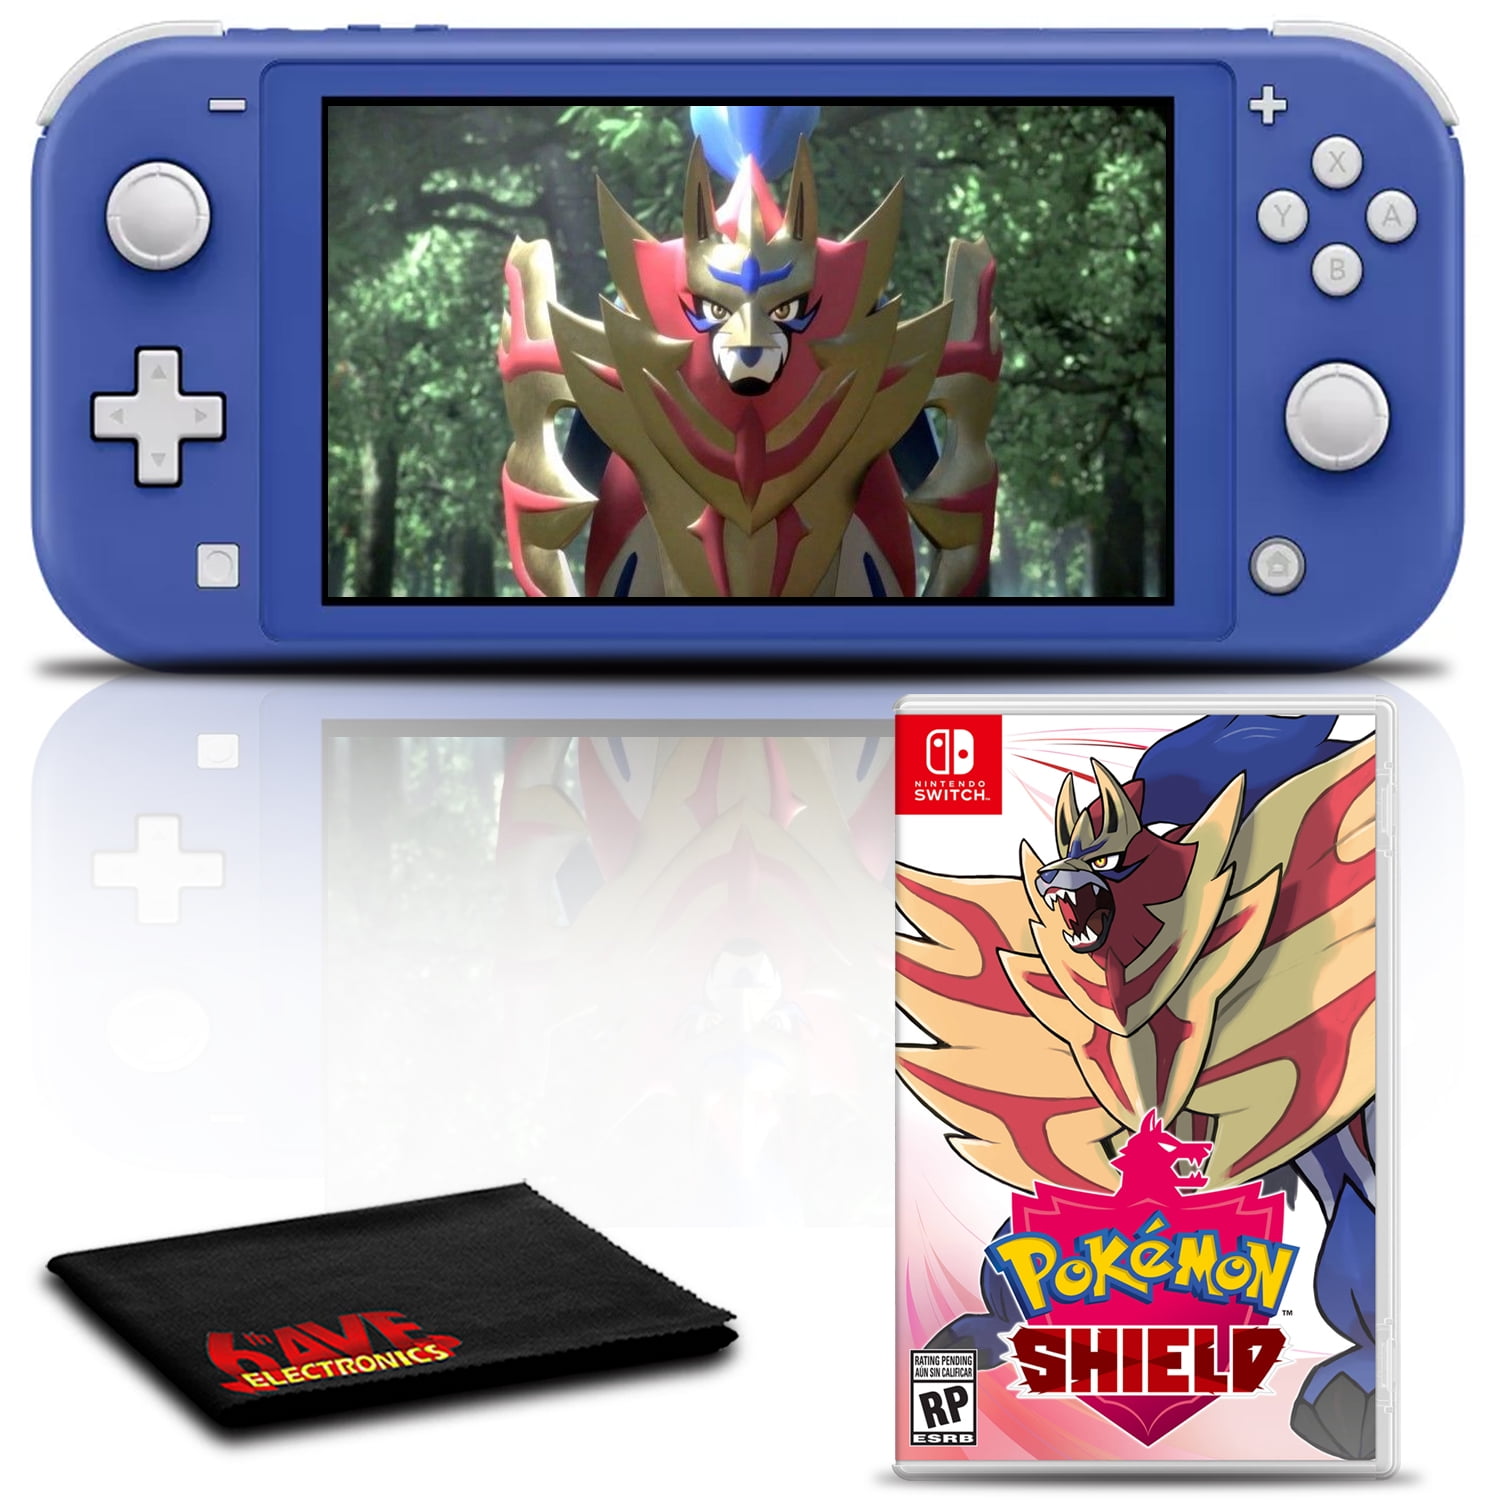 Pokémon Sword and Shield Nintendo Switch Lite special edition announced -  Polygon